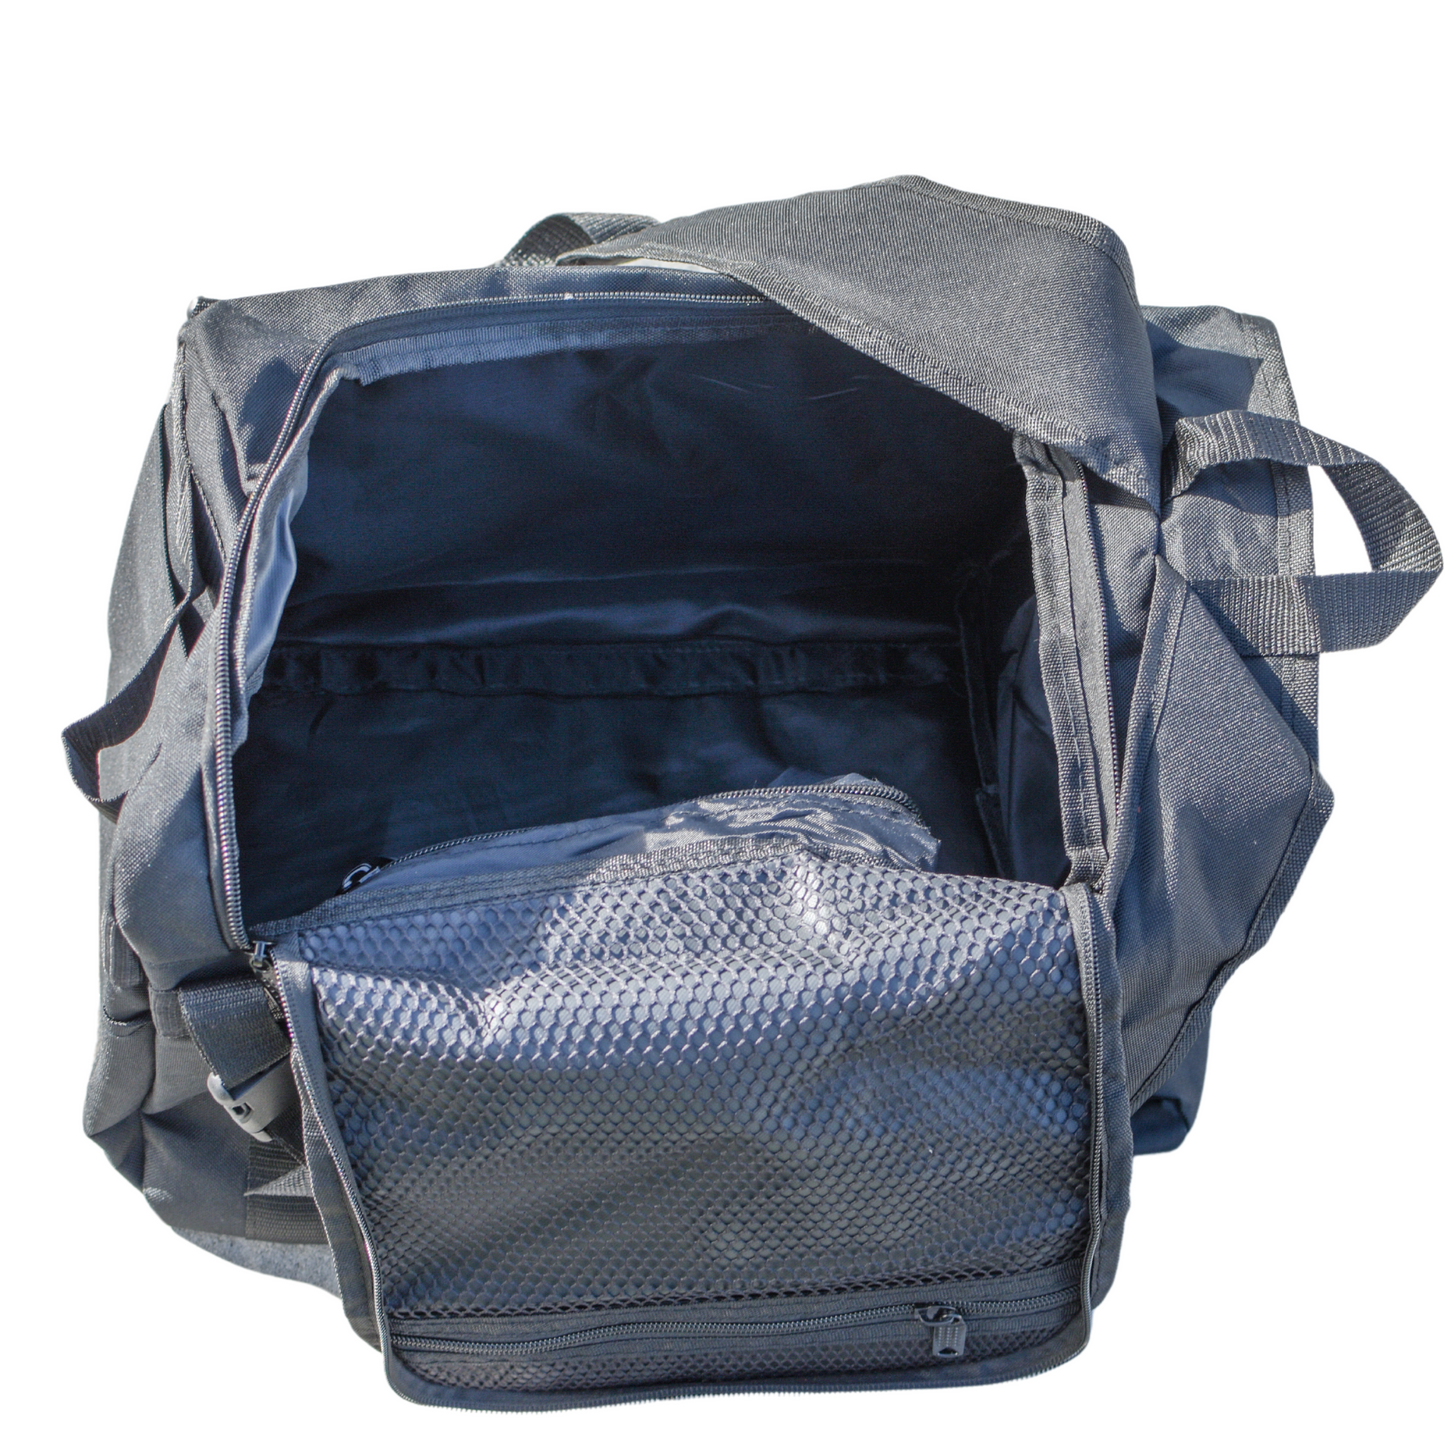 2 Bag Combo '66L Travel bag & 22L Gym Bag